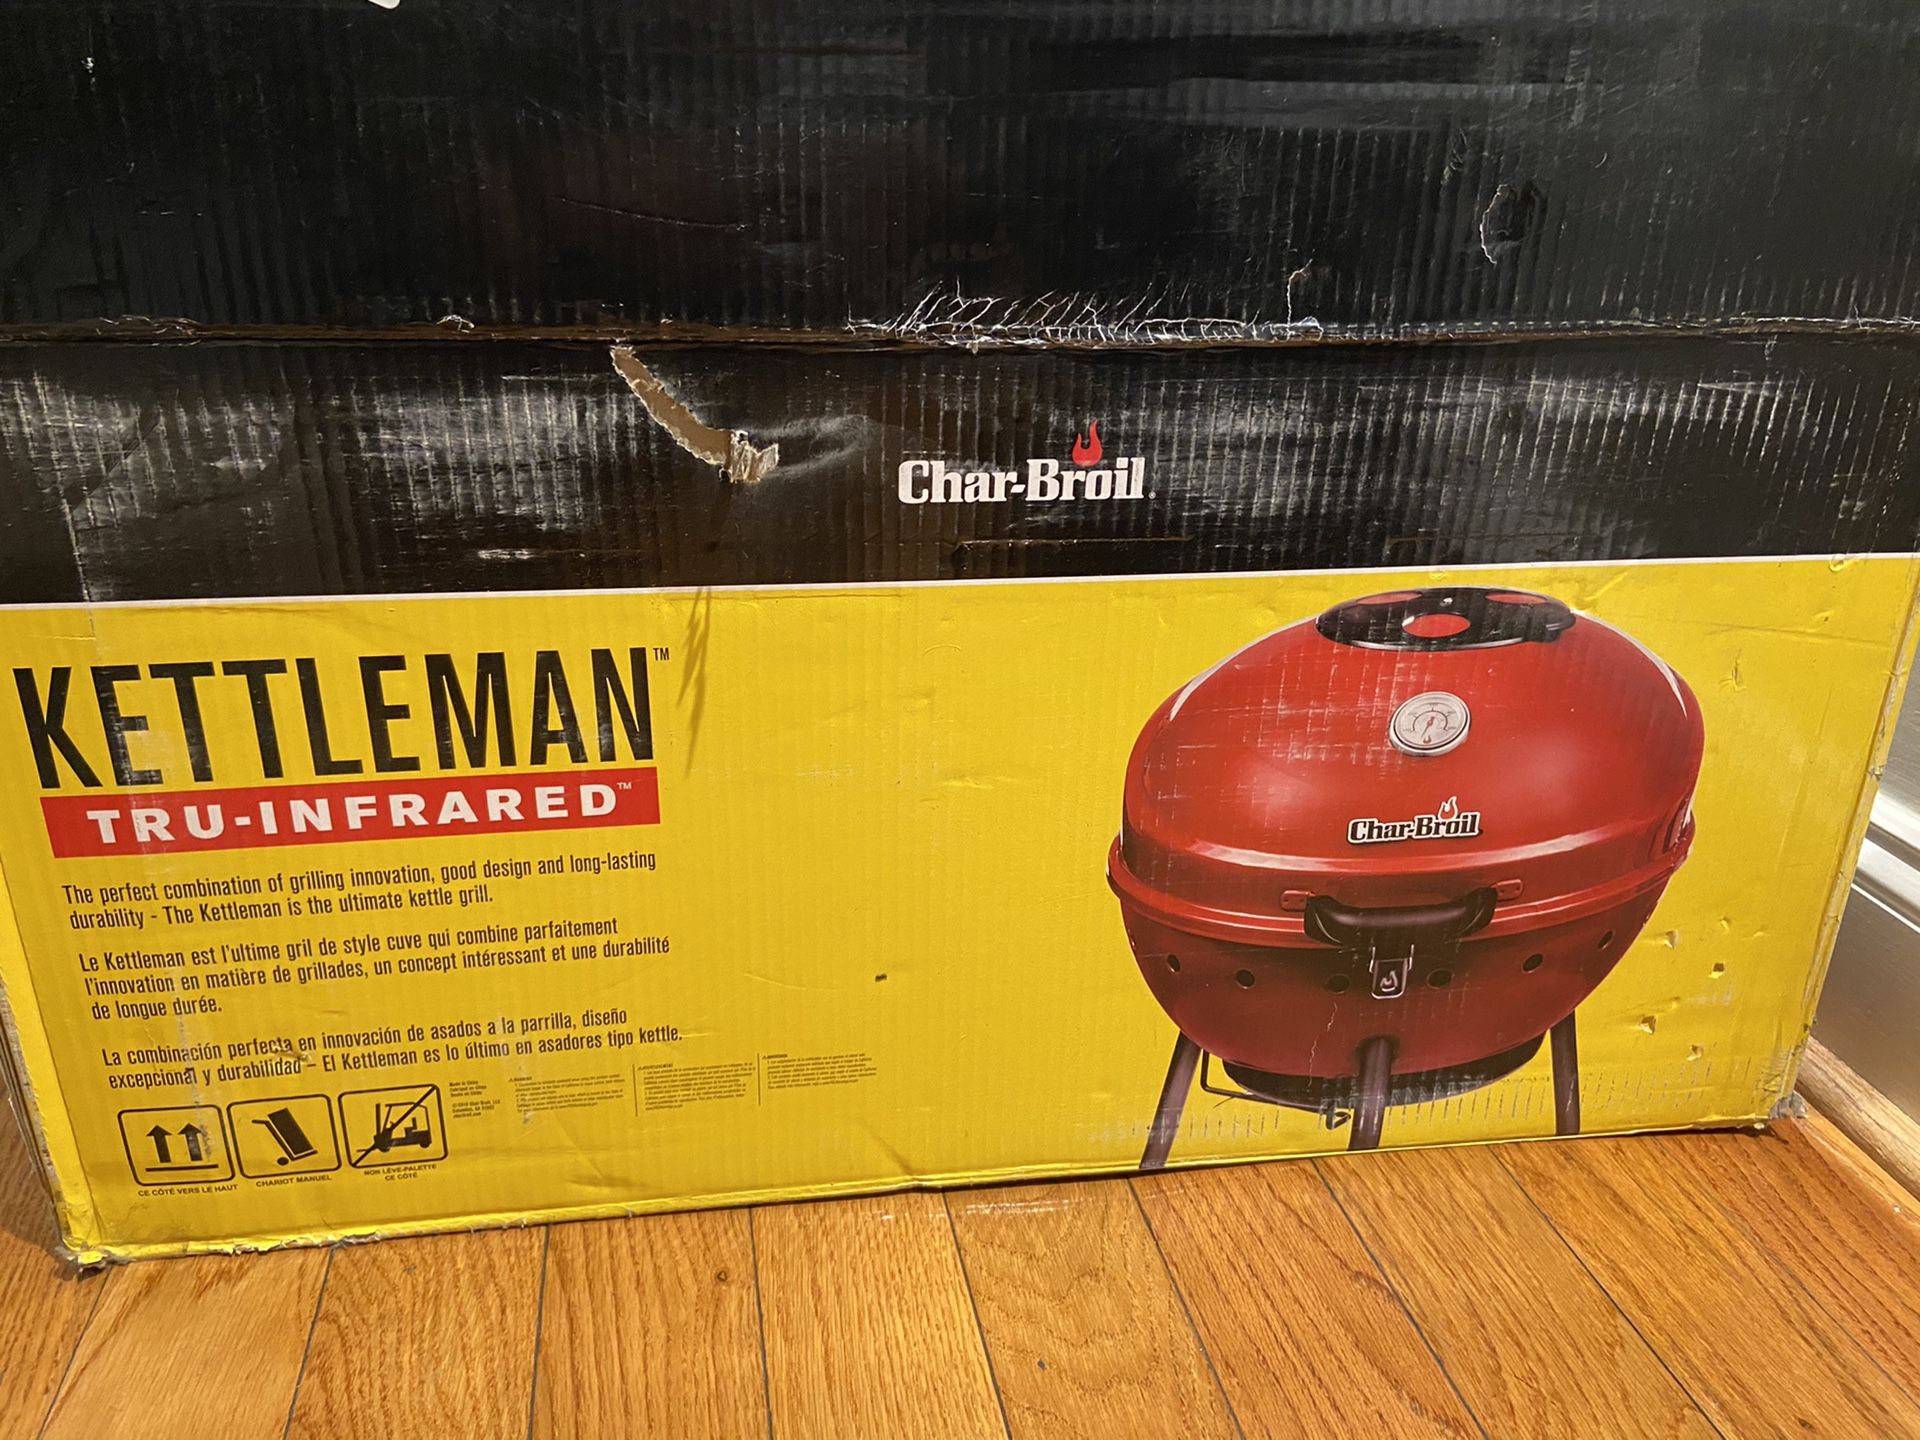 Kettleman Tru-infrared Charcoal grill